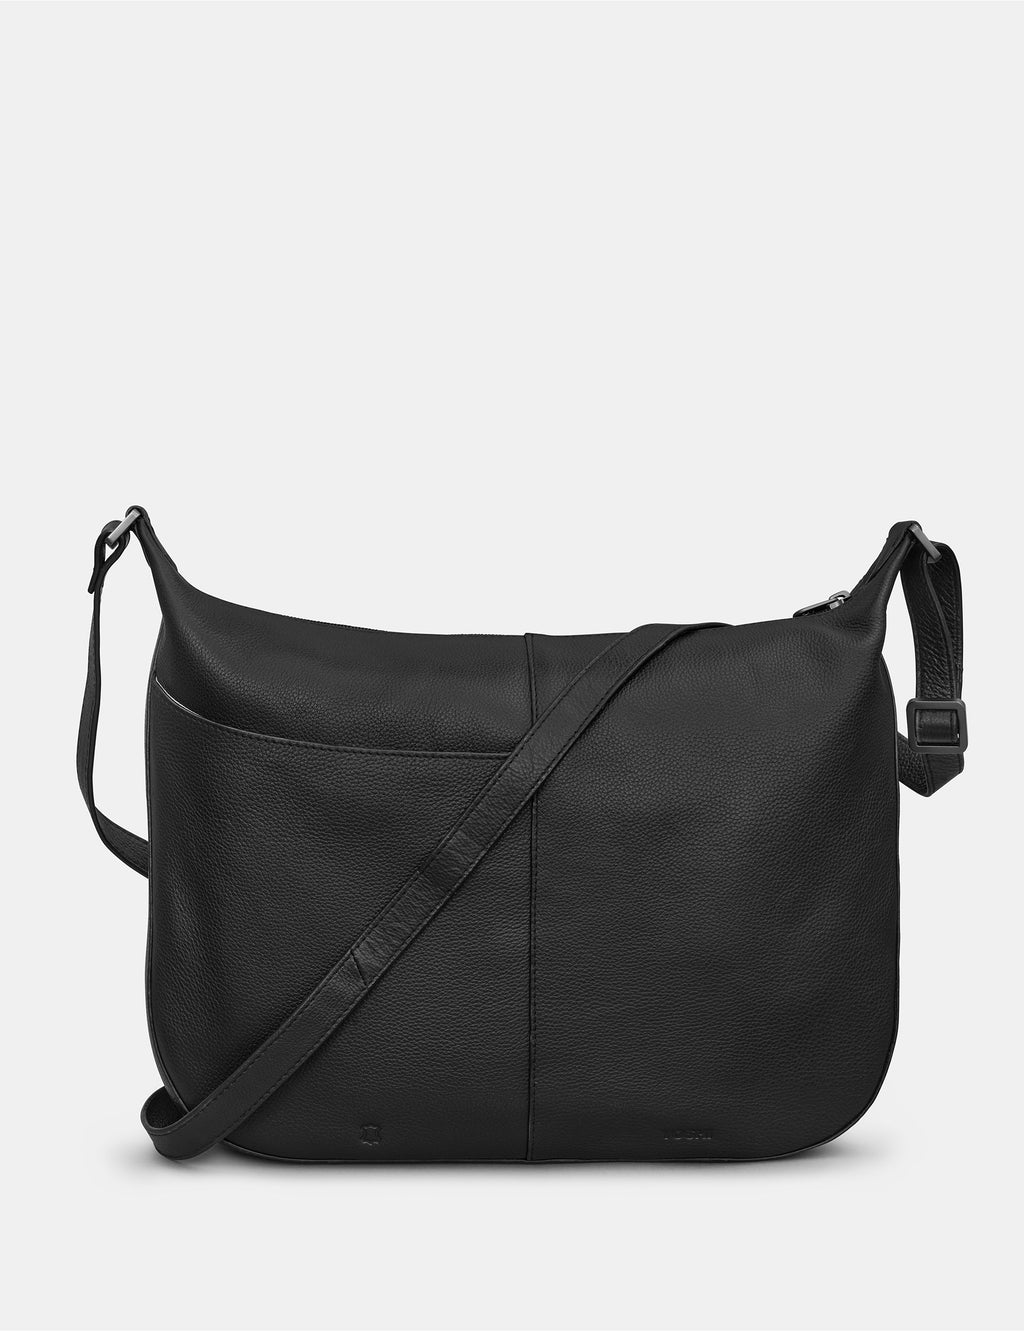 Yoshi - Black Zebra Leather Hobo Bag